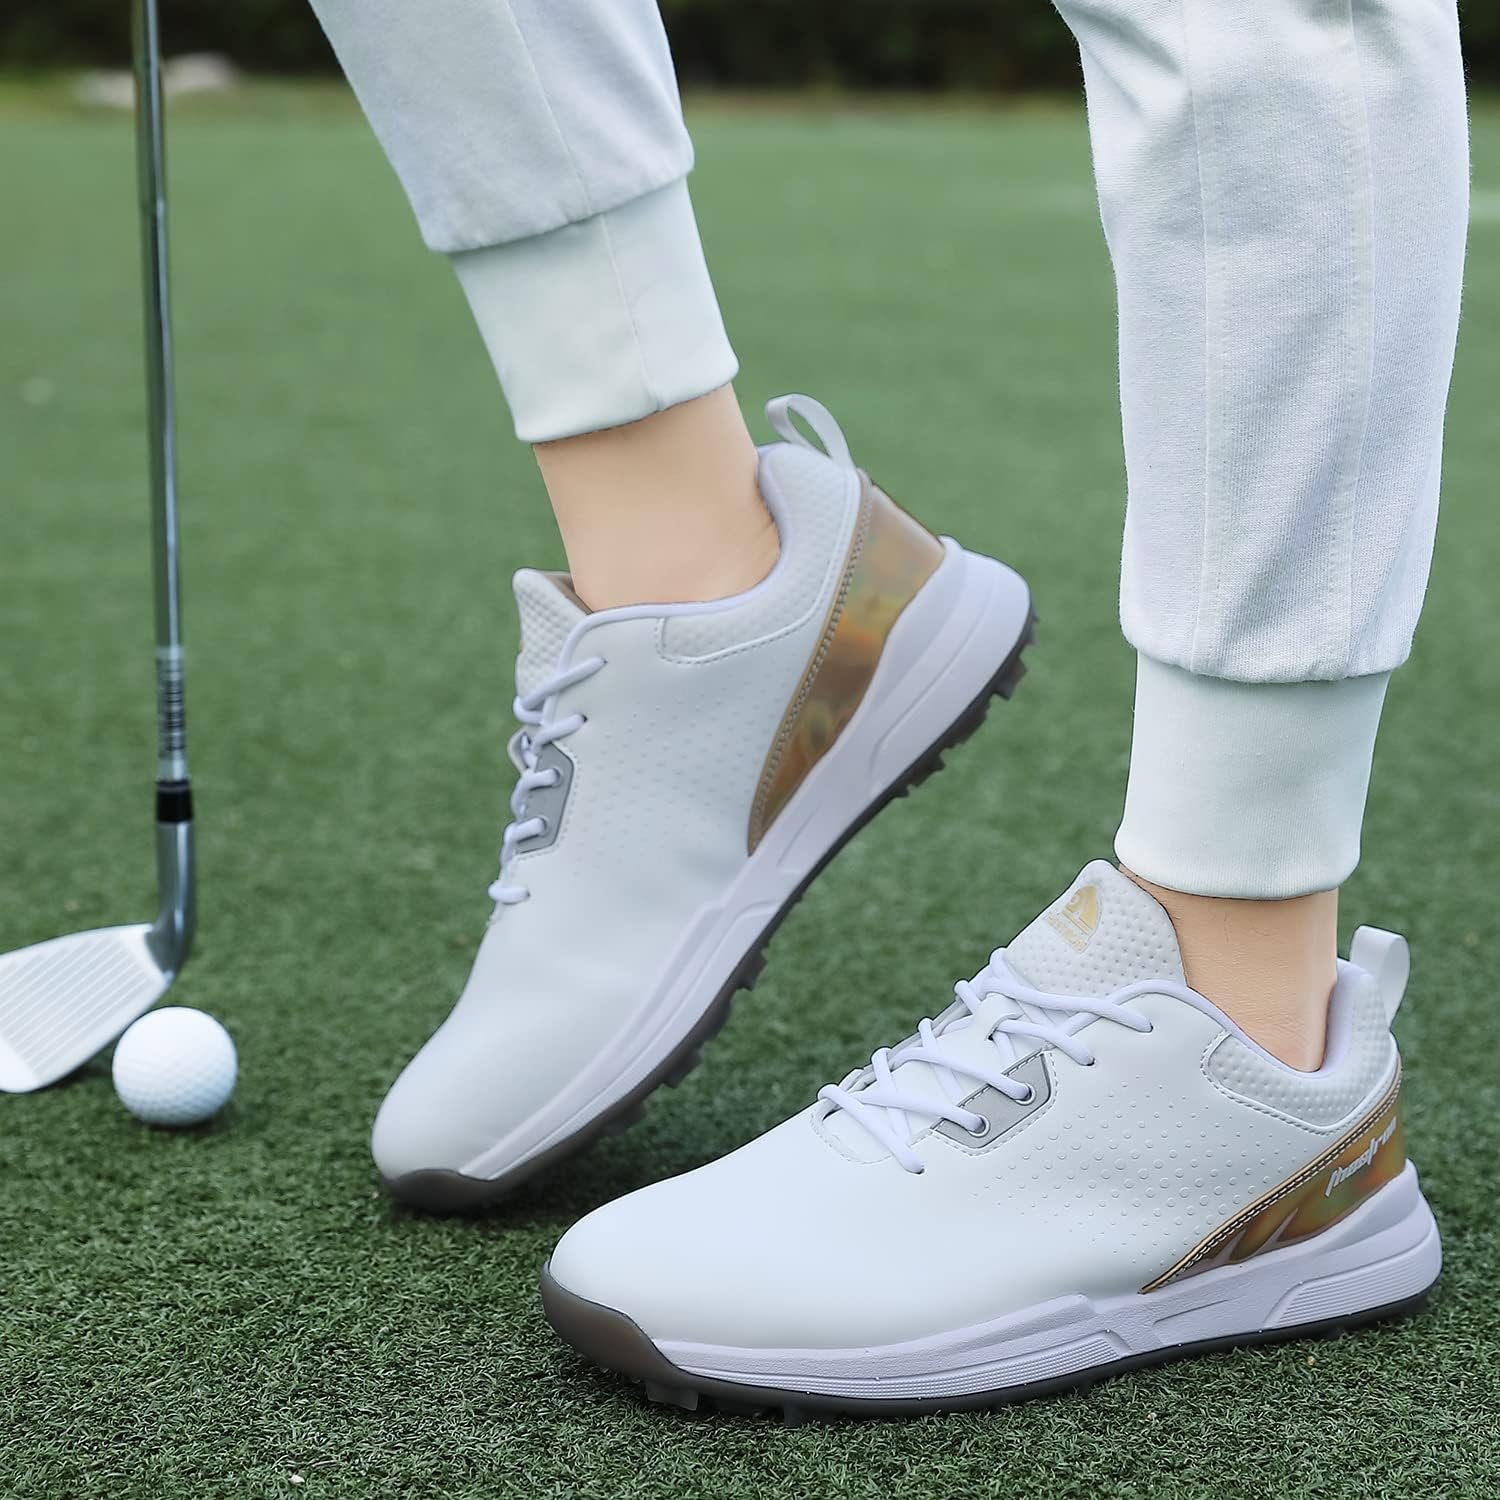 Professional Men Golf Shoes Comfortable Spikeless Outdoor Golf Walking Sport Sneakers for Men